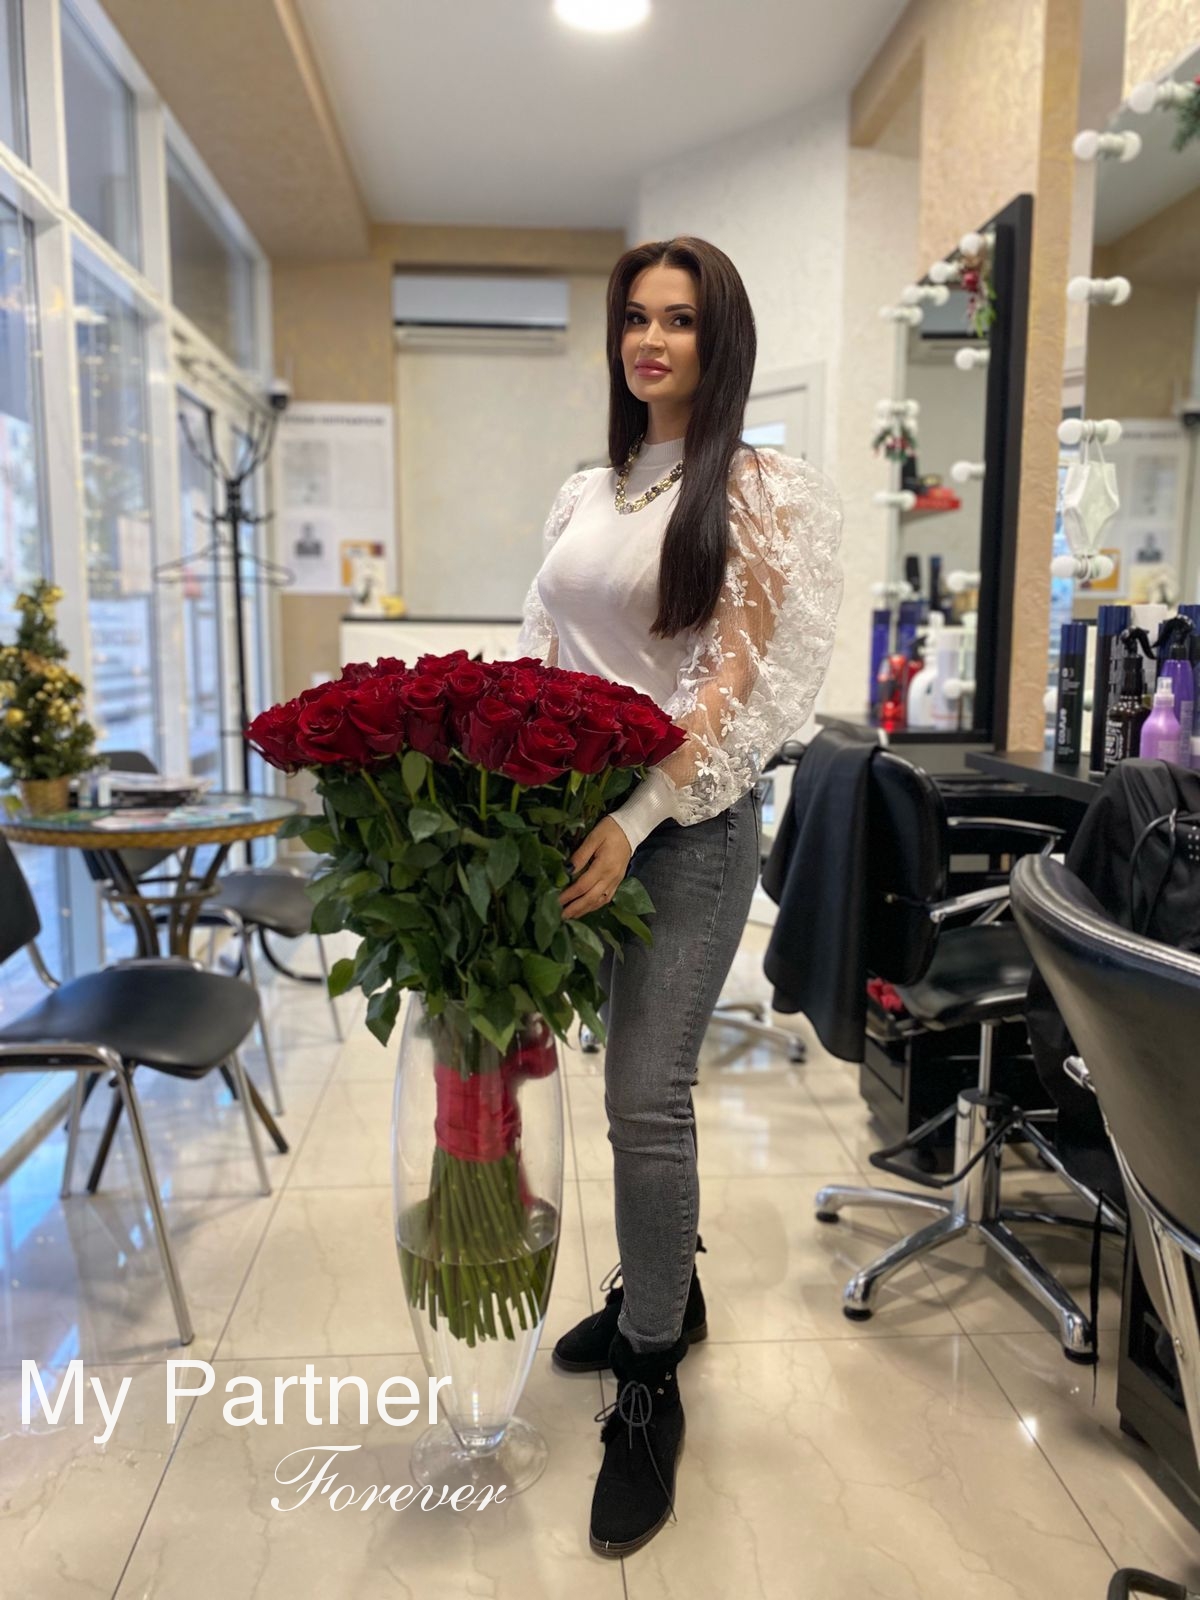 Datingsite to Meet Single Russian Woman Marina from Gelendzhik , Russia